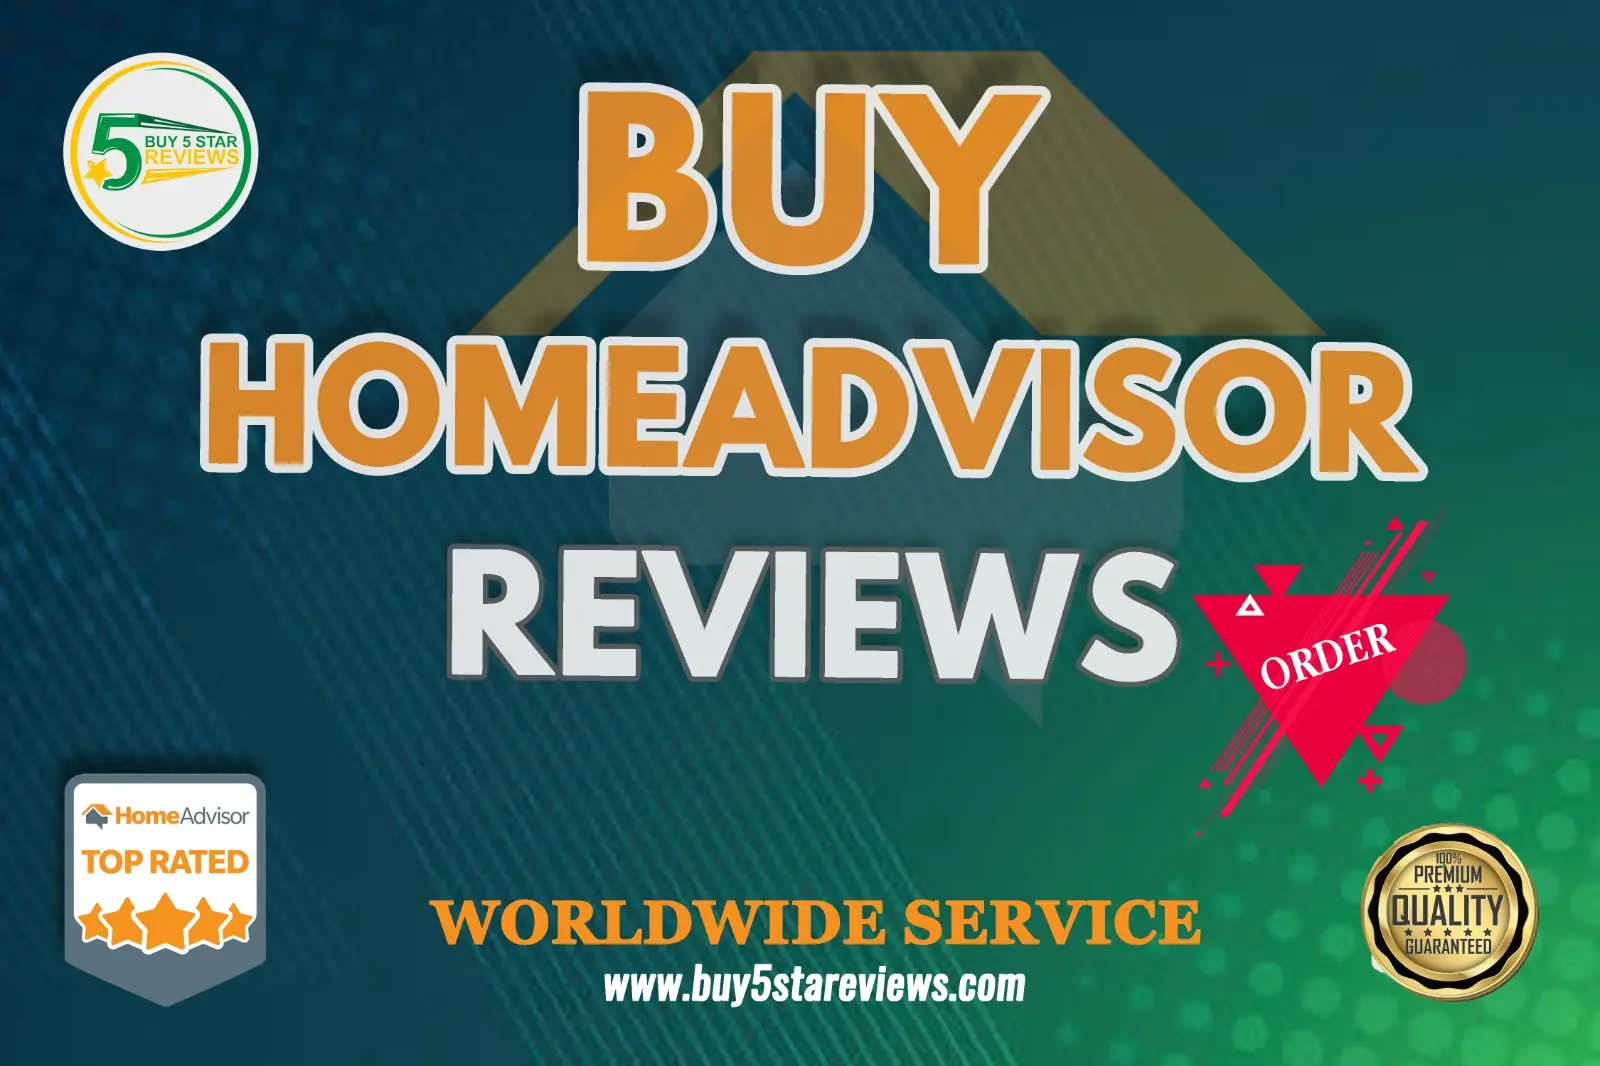 Buy HomeAdvisor Reviews